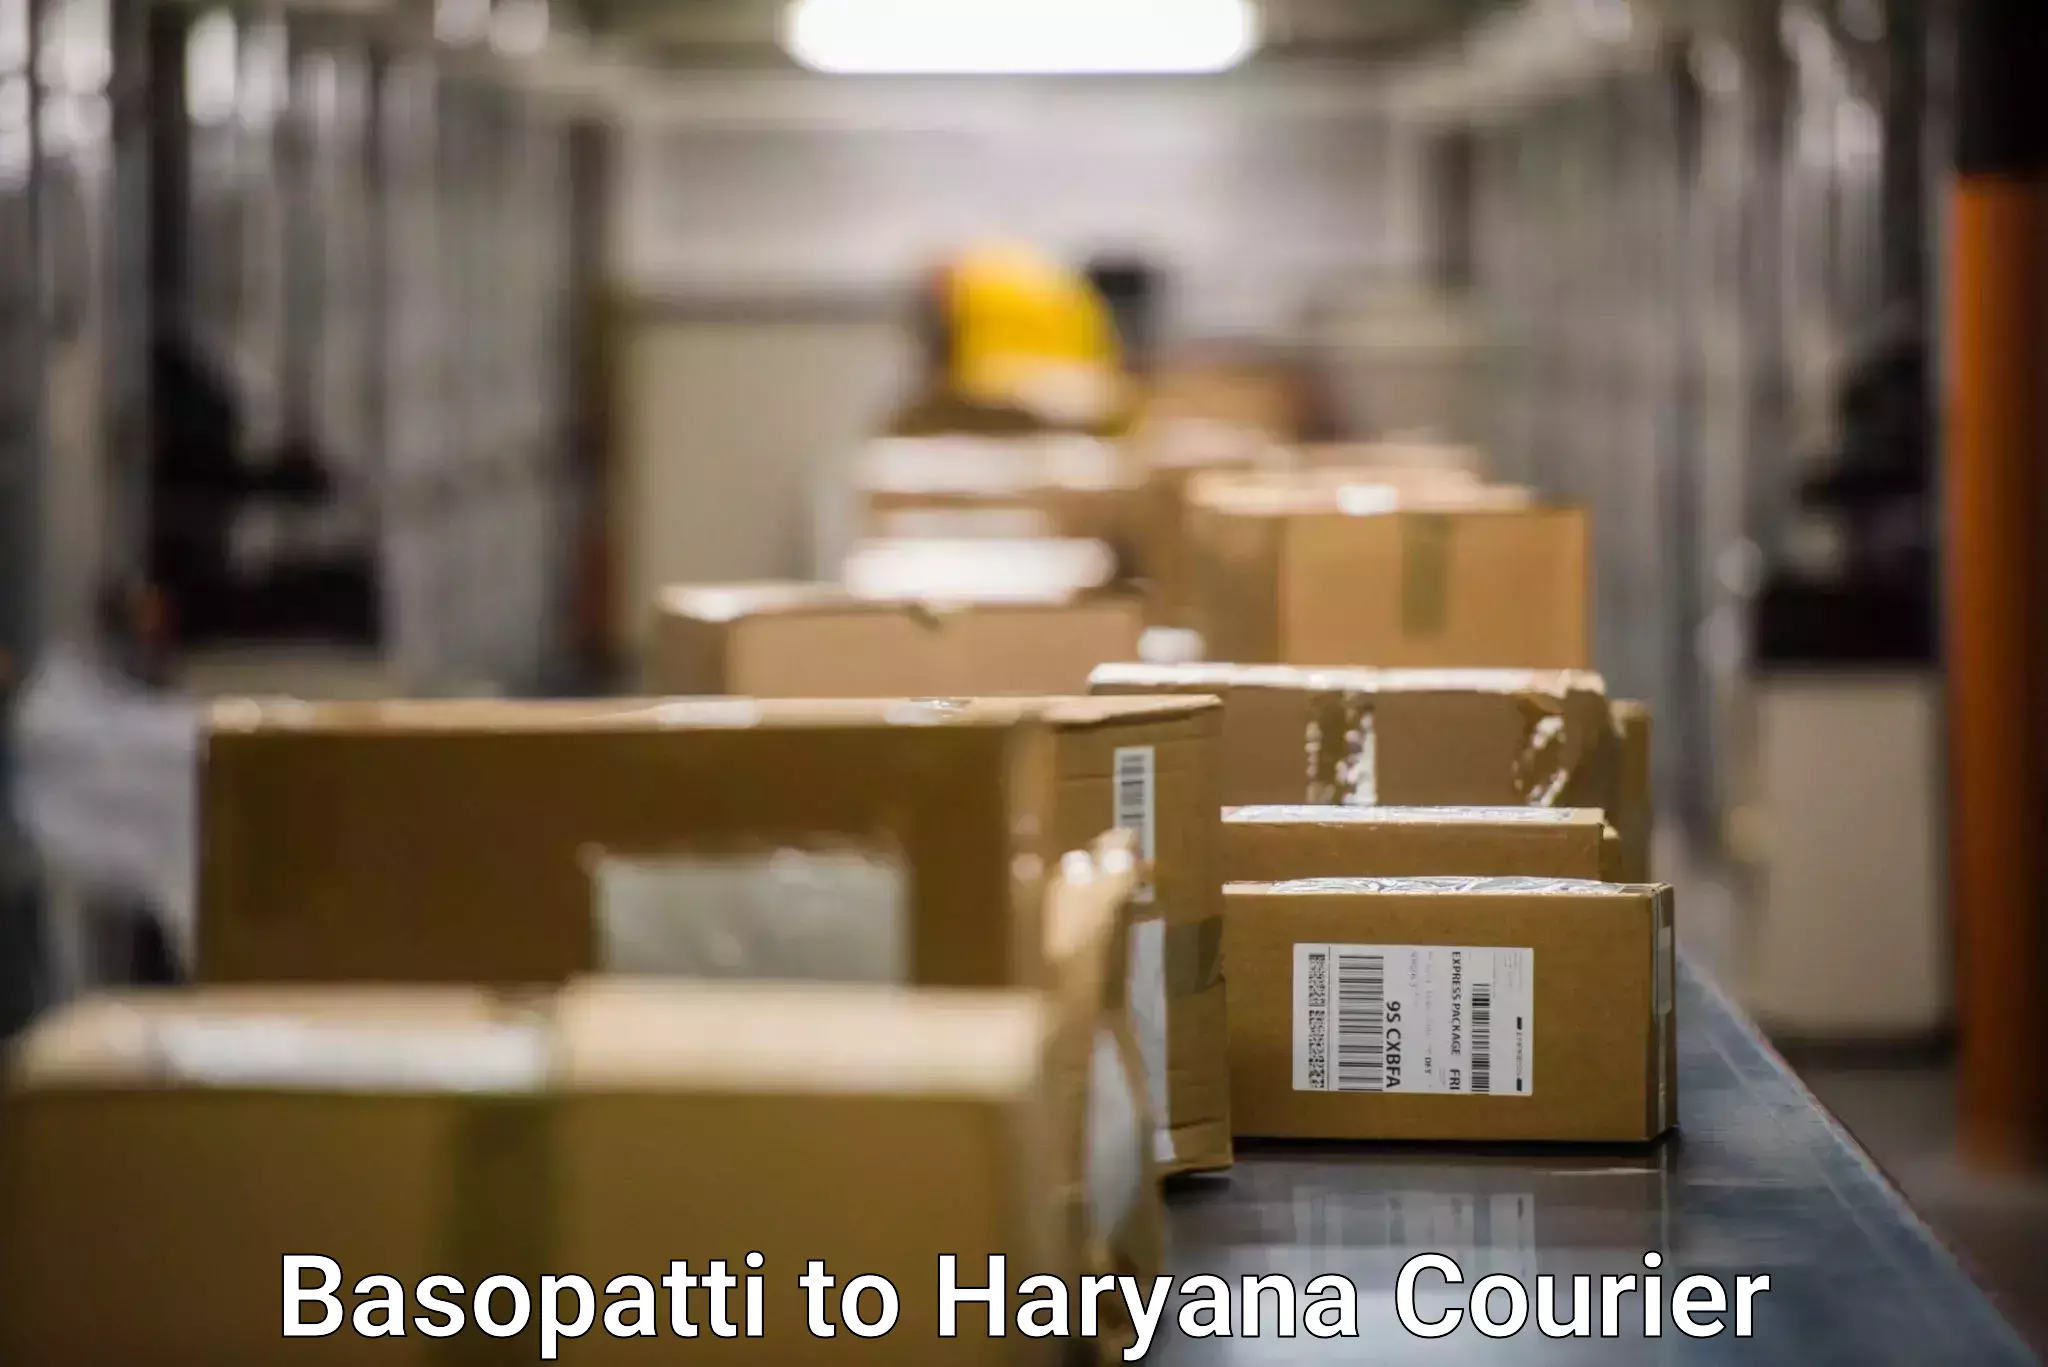 Global courier networks Basopatti to Haryana